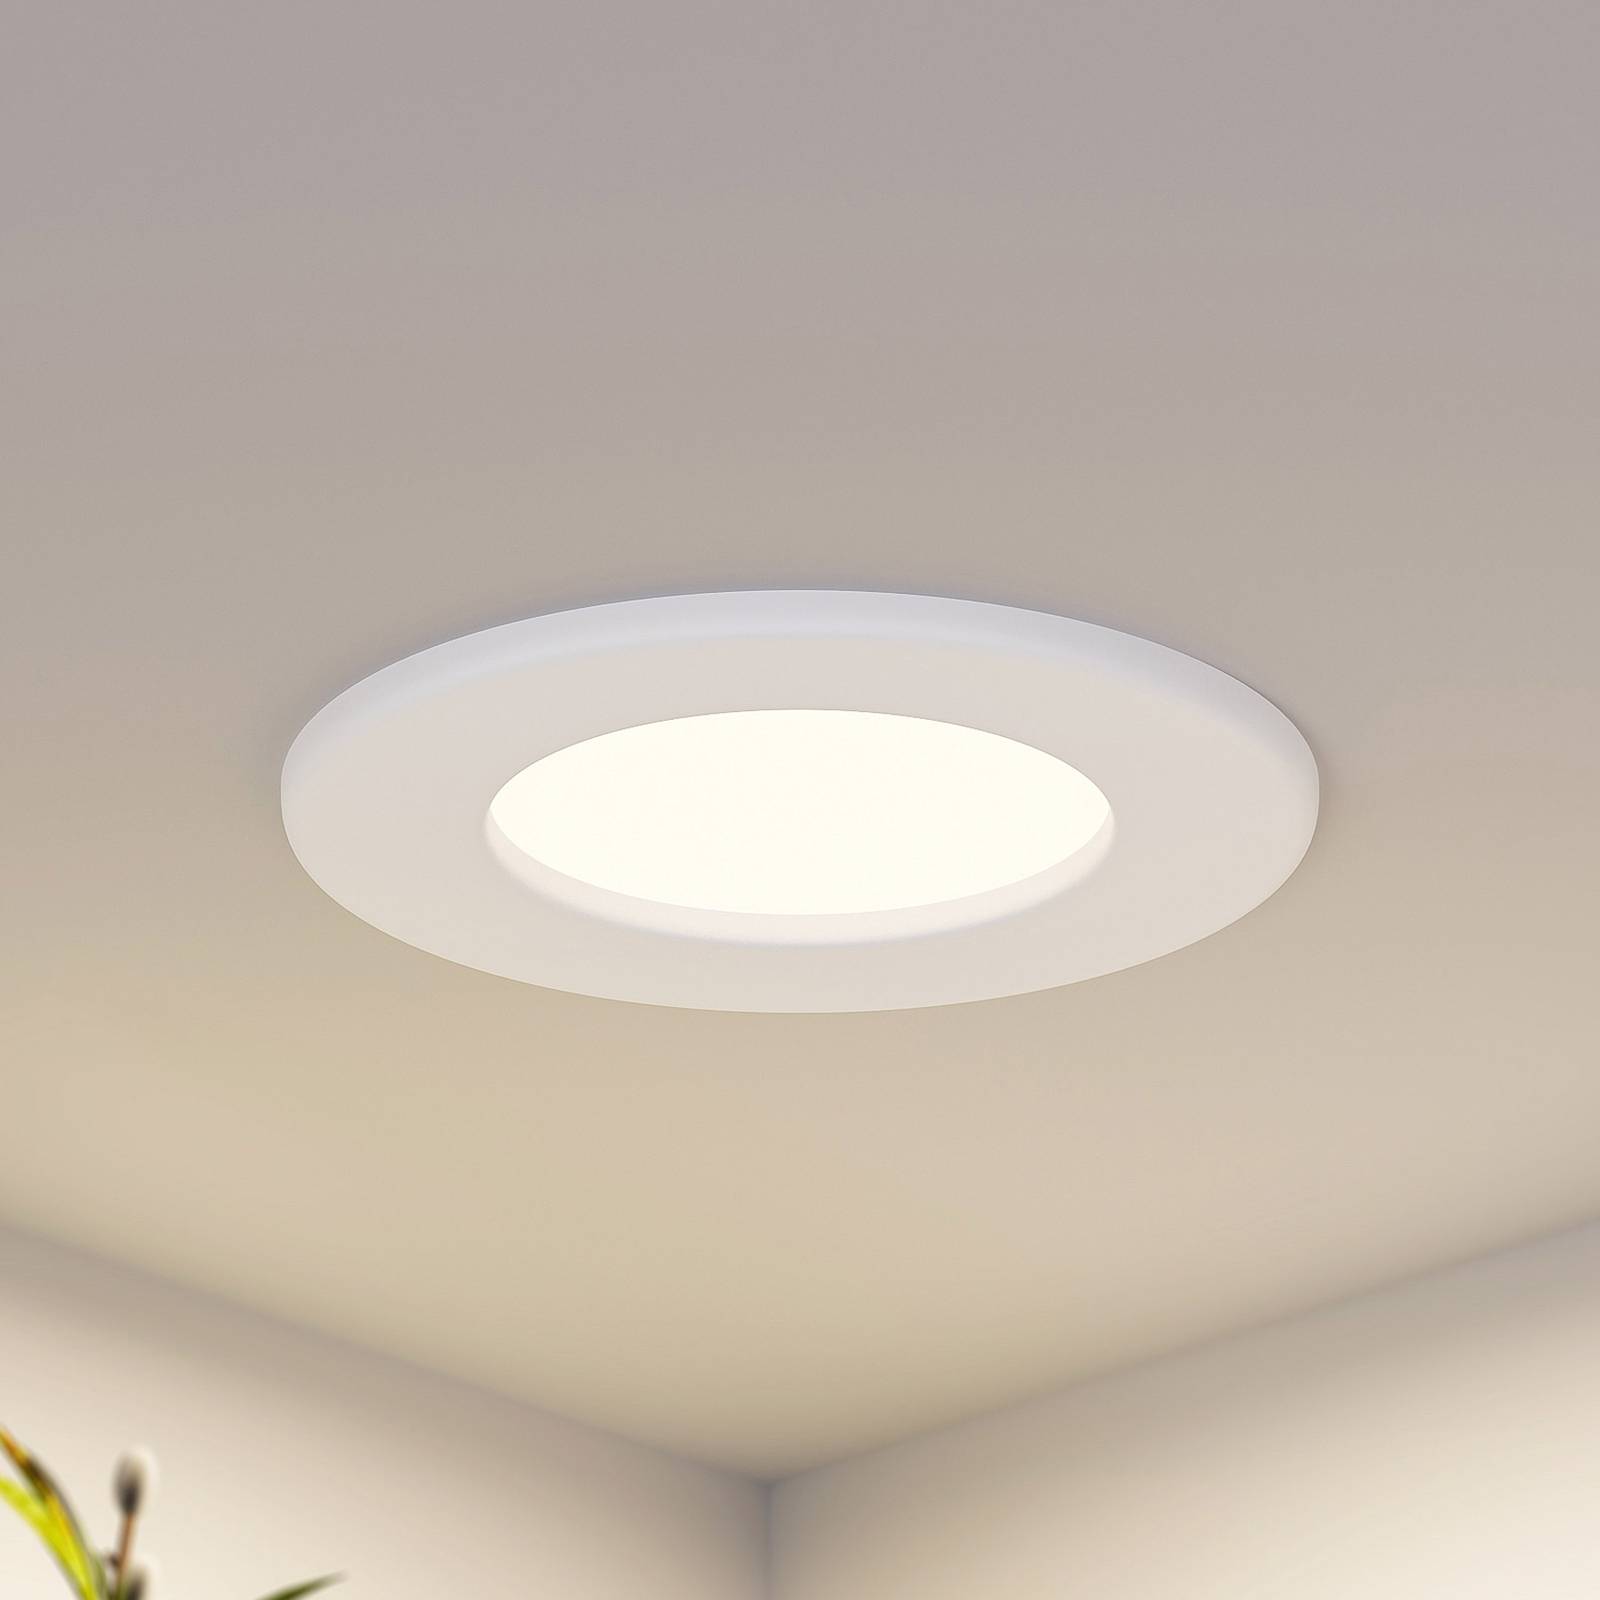 PRIOS Prios Cadance LED podhledové světlo bílé, 11,5cm